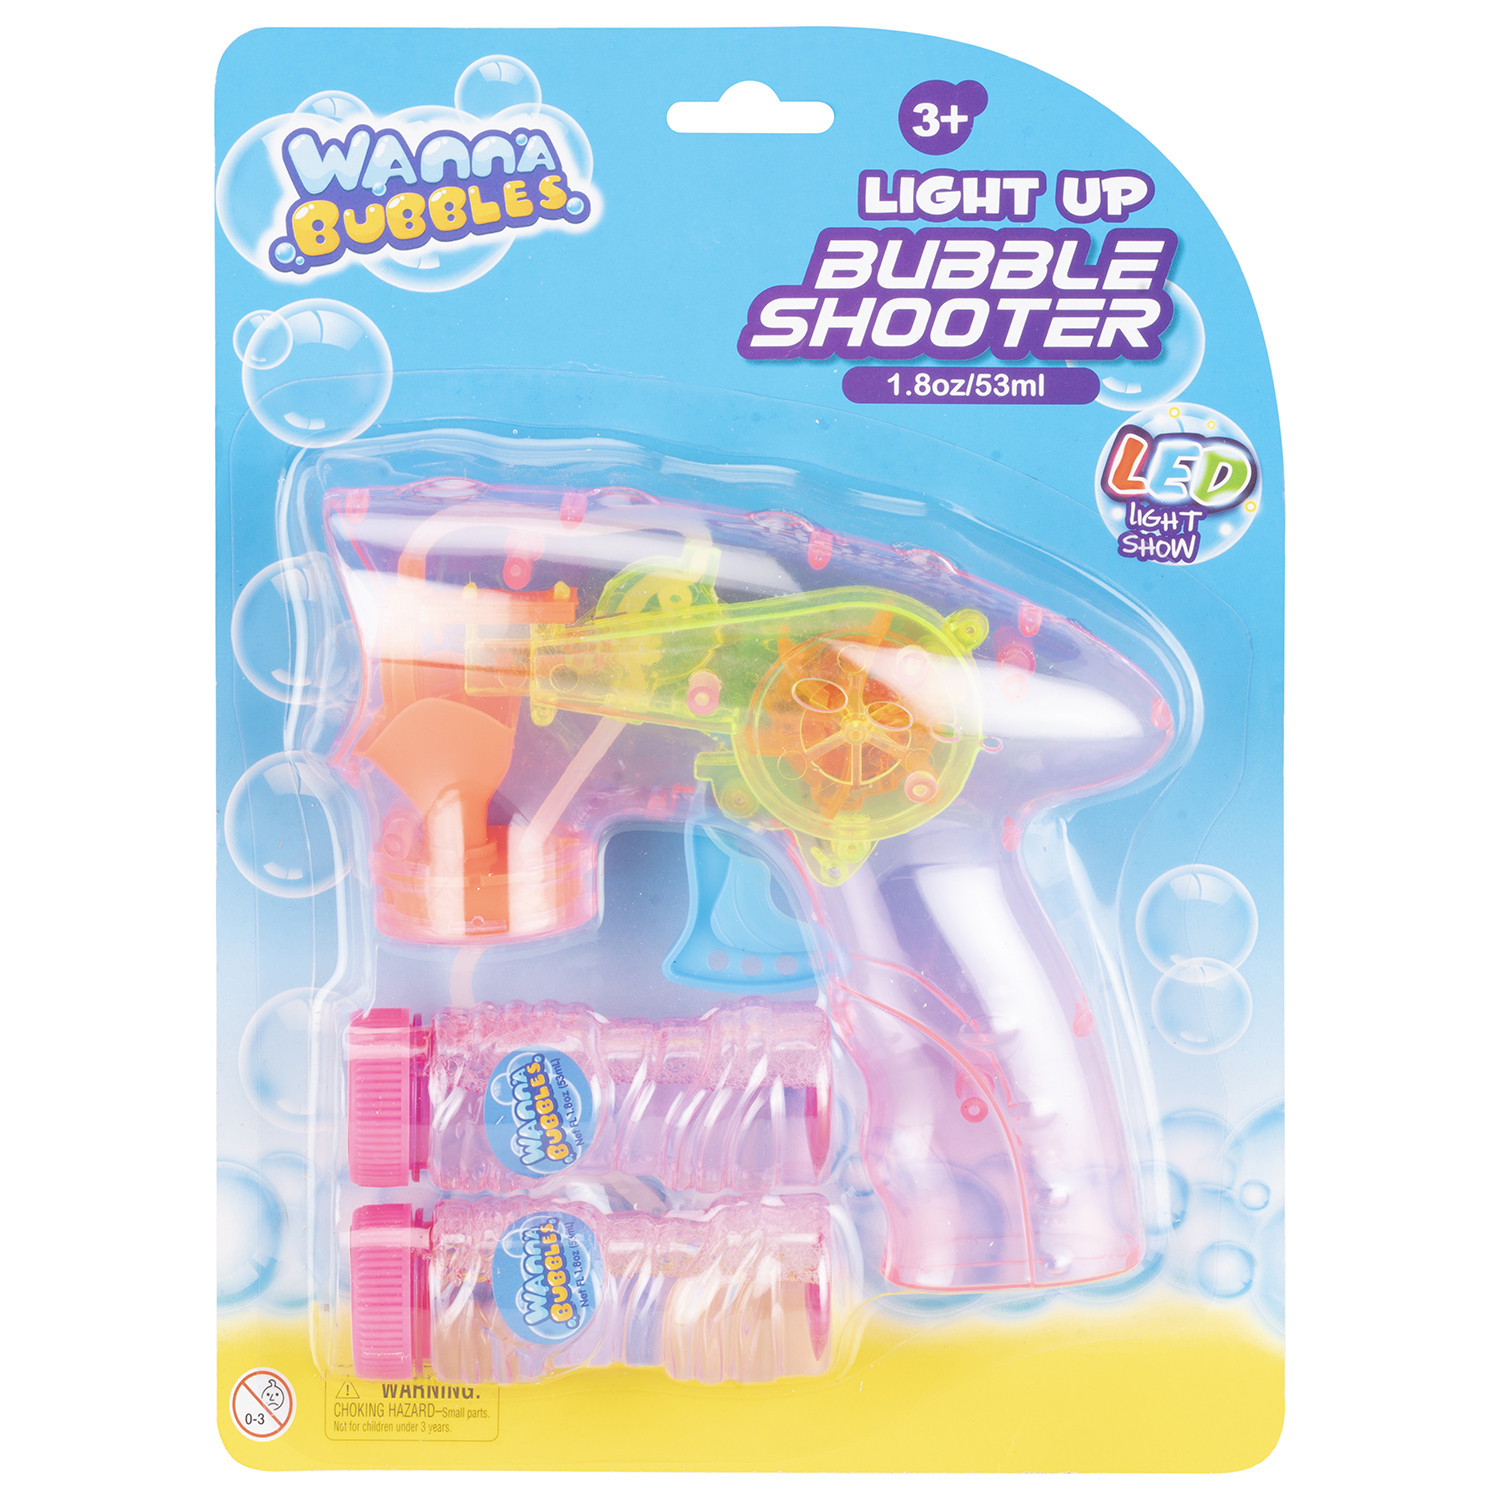 Wanna Bubbles Light Up Bubble Shooter Image 1